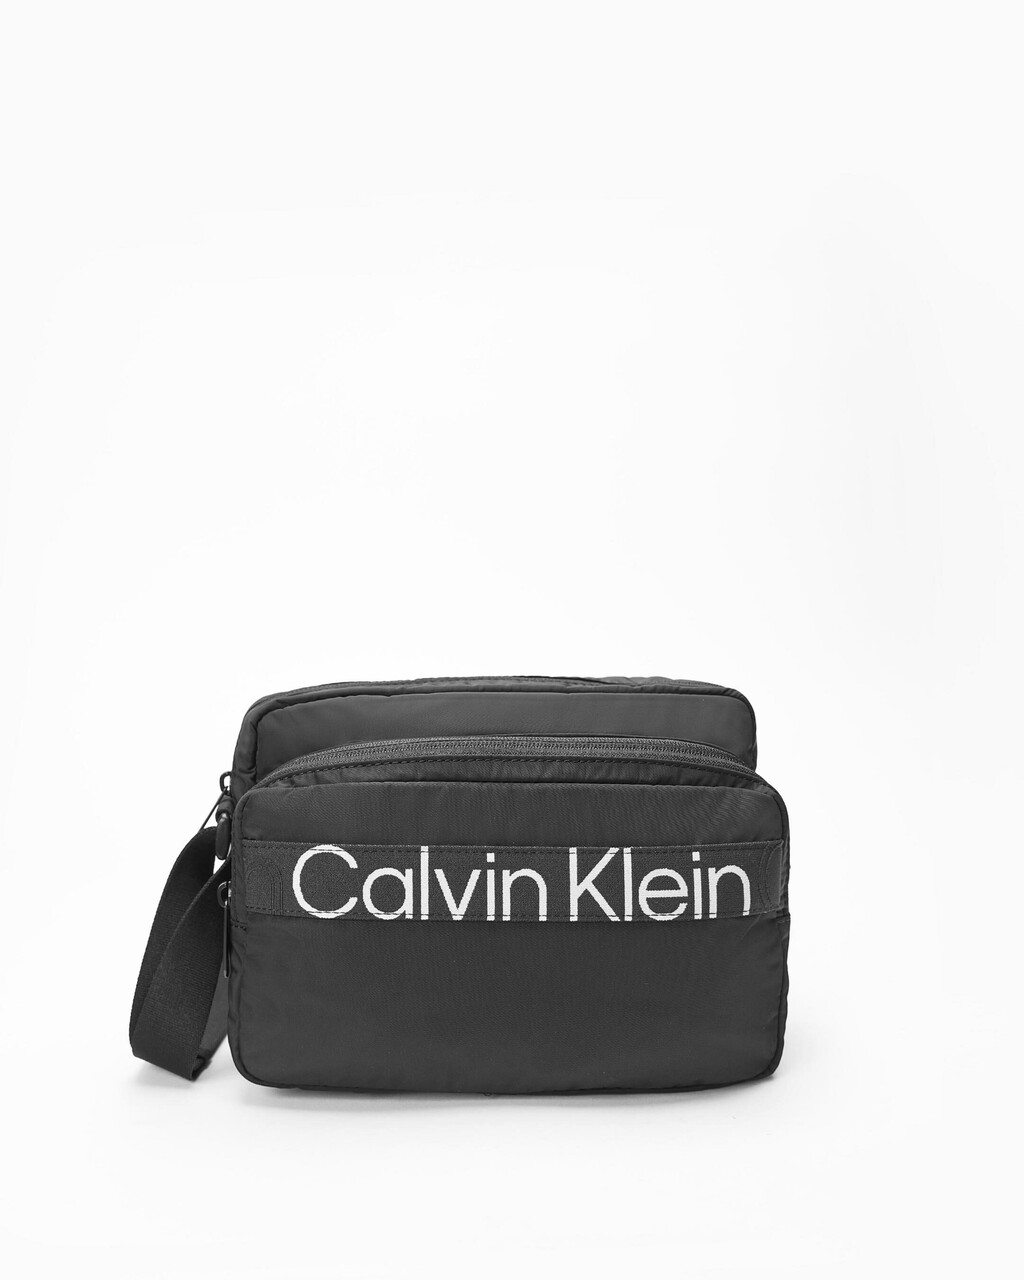 CALVIN KLEIN 運動相機袋, BLACK, hi-res